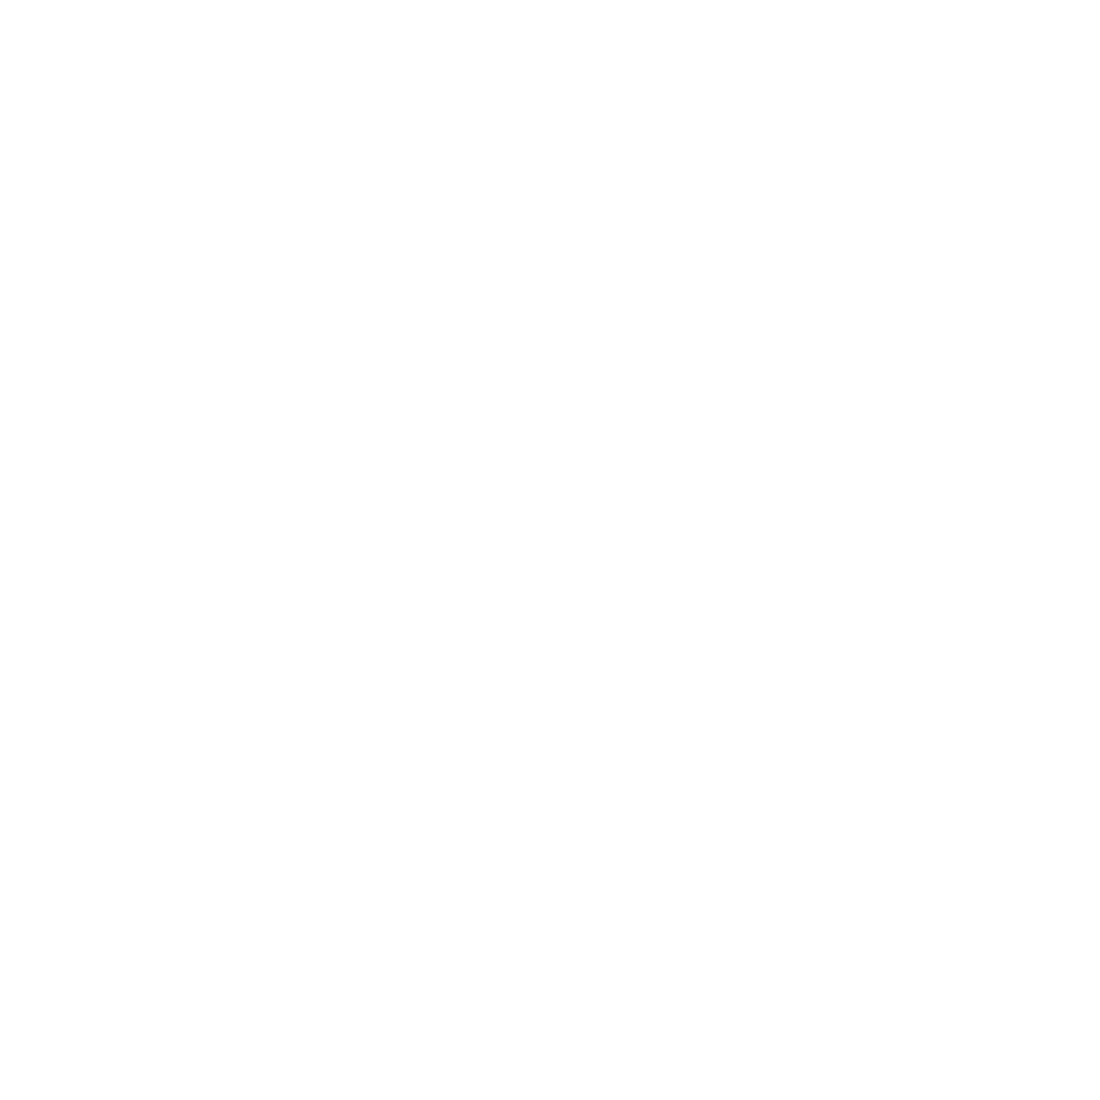 Mount Carmell